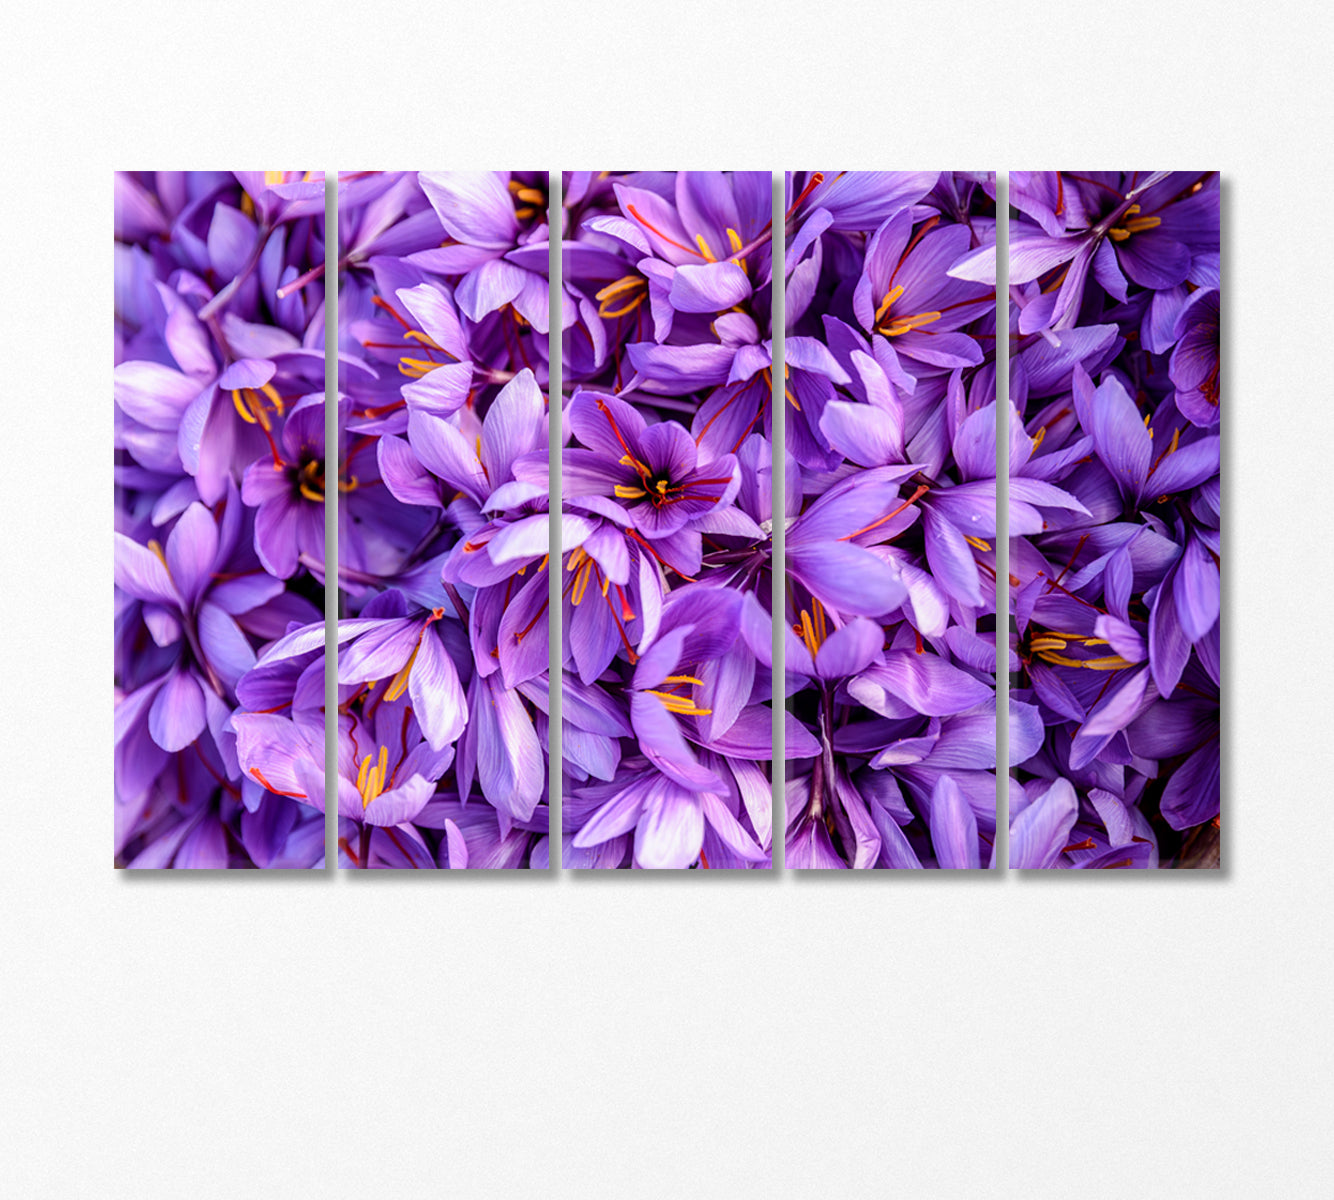 Blooming Saffron Flowers Canvas Print-Canvas Print-CetArt-5 Panels-36x24 inches-CetArt